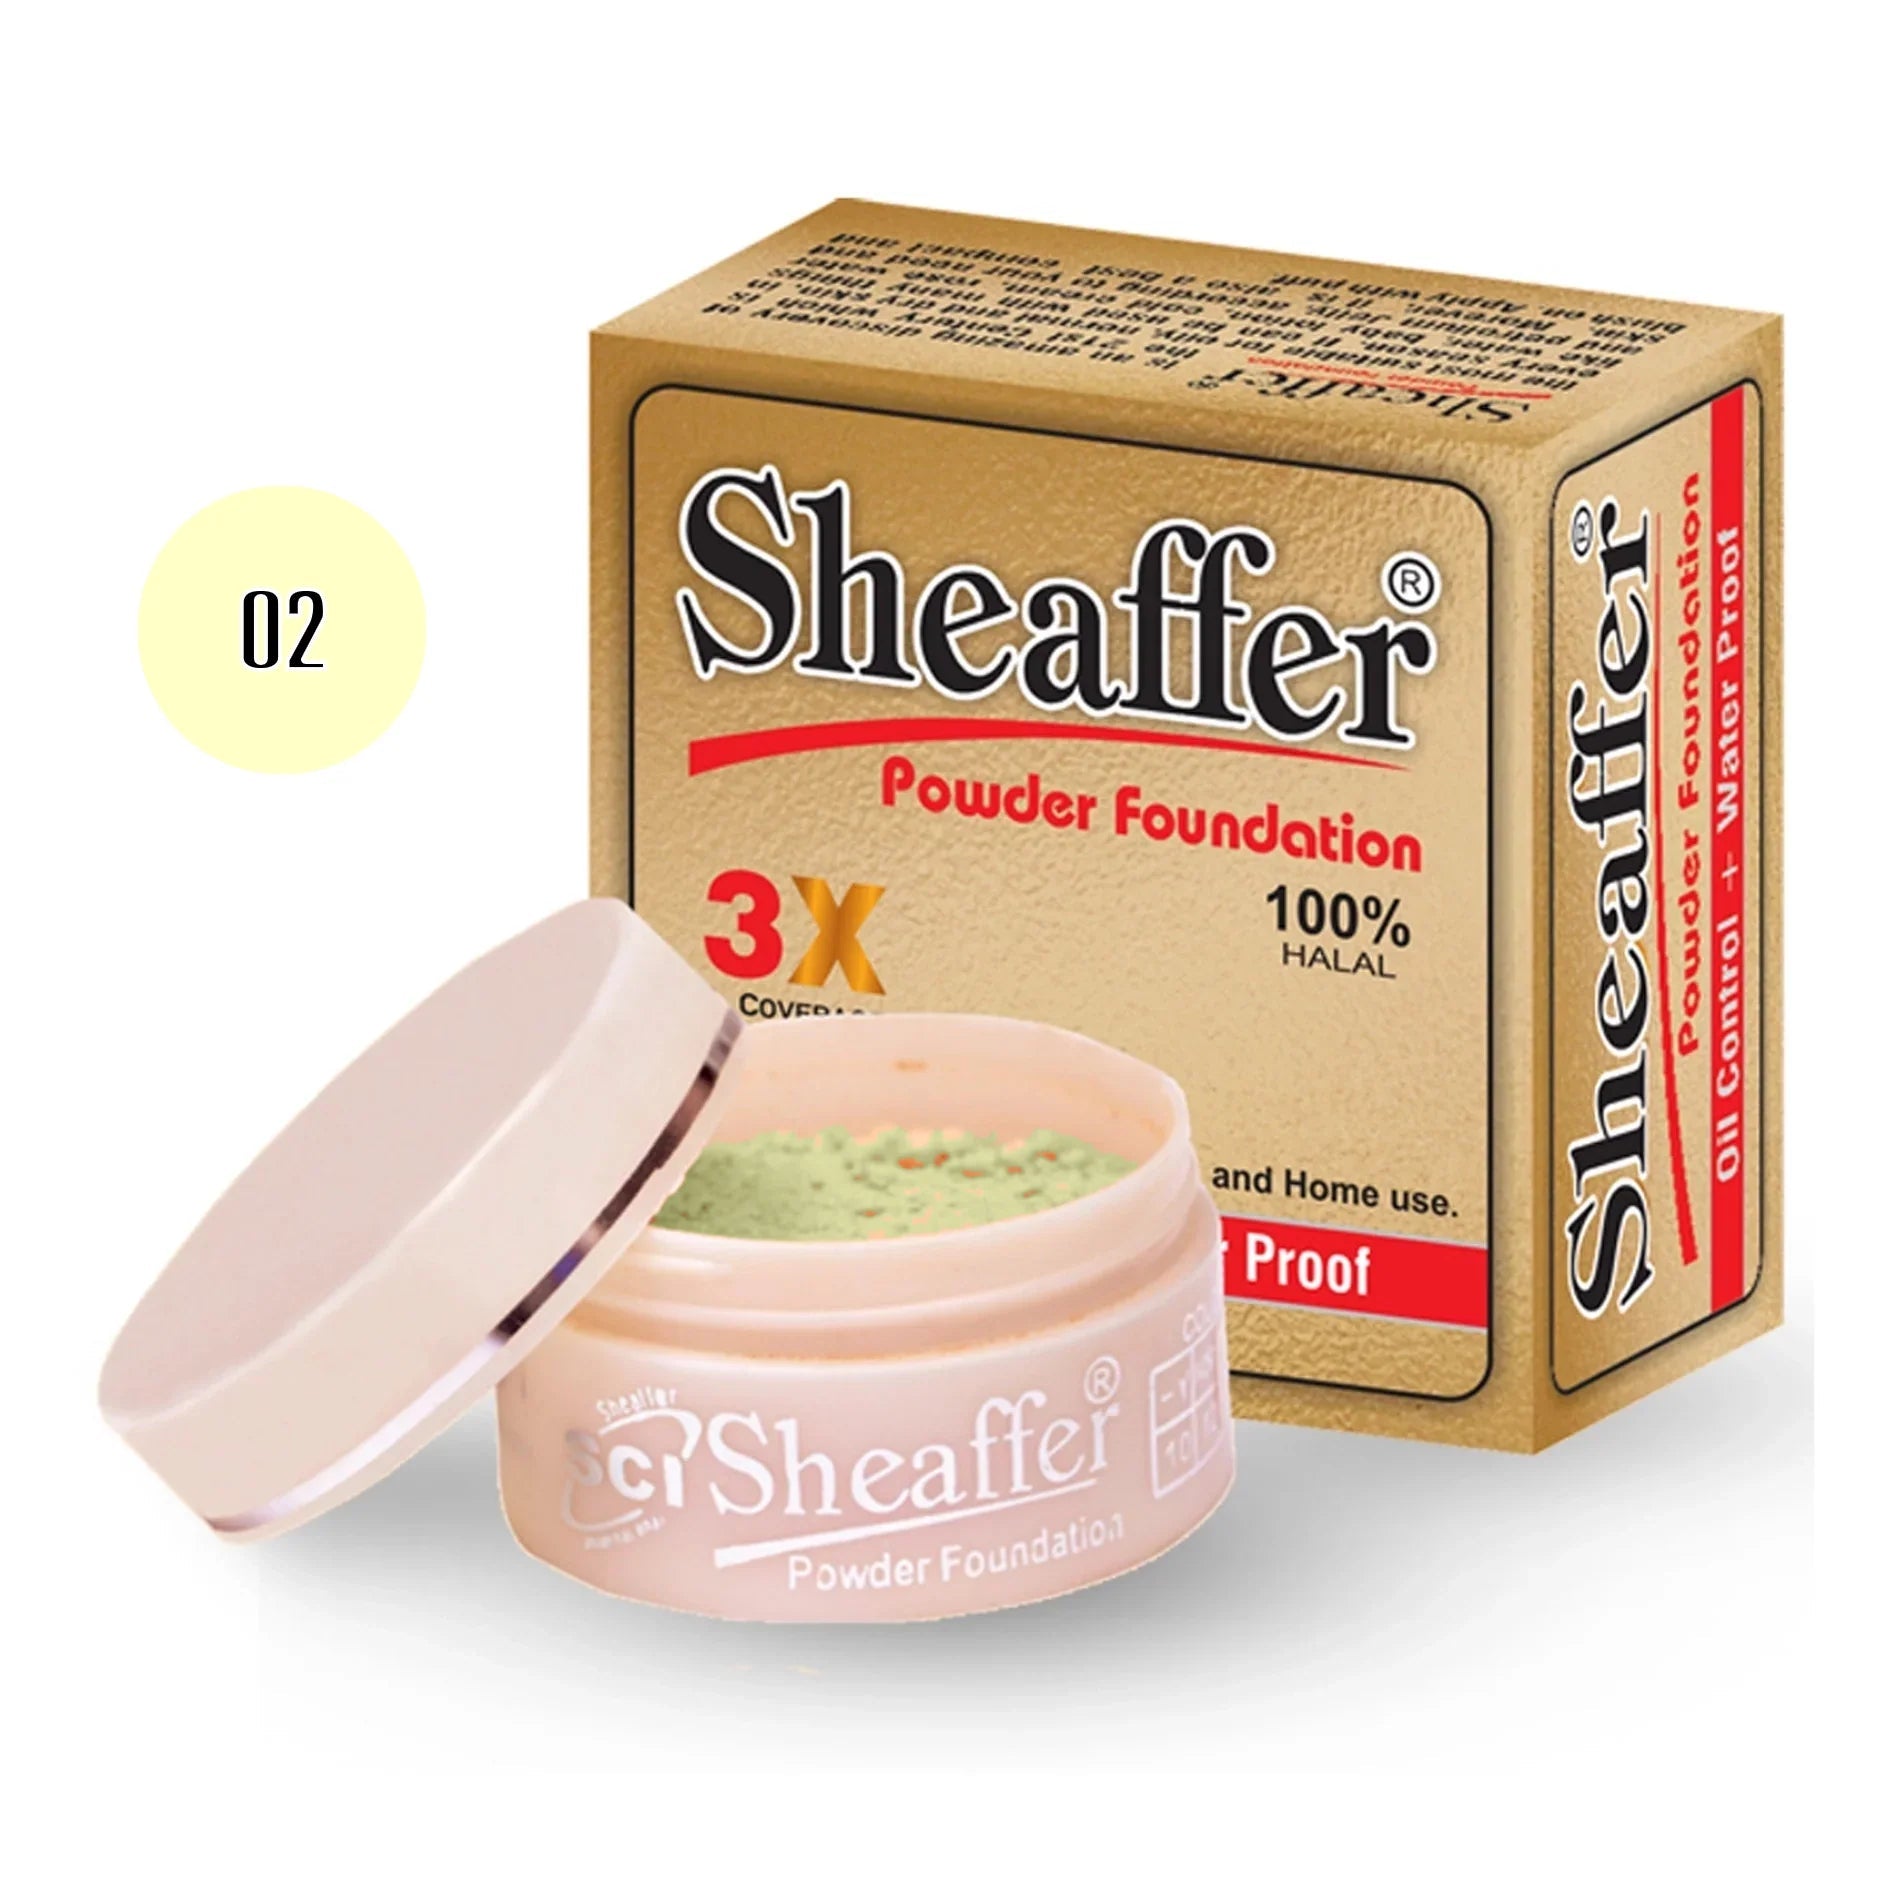 Sheaffer Powder Foundation Base 10 Shade - Retailershop - Online Shopping Center